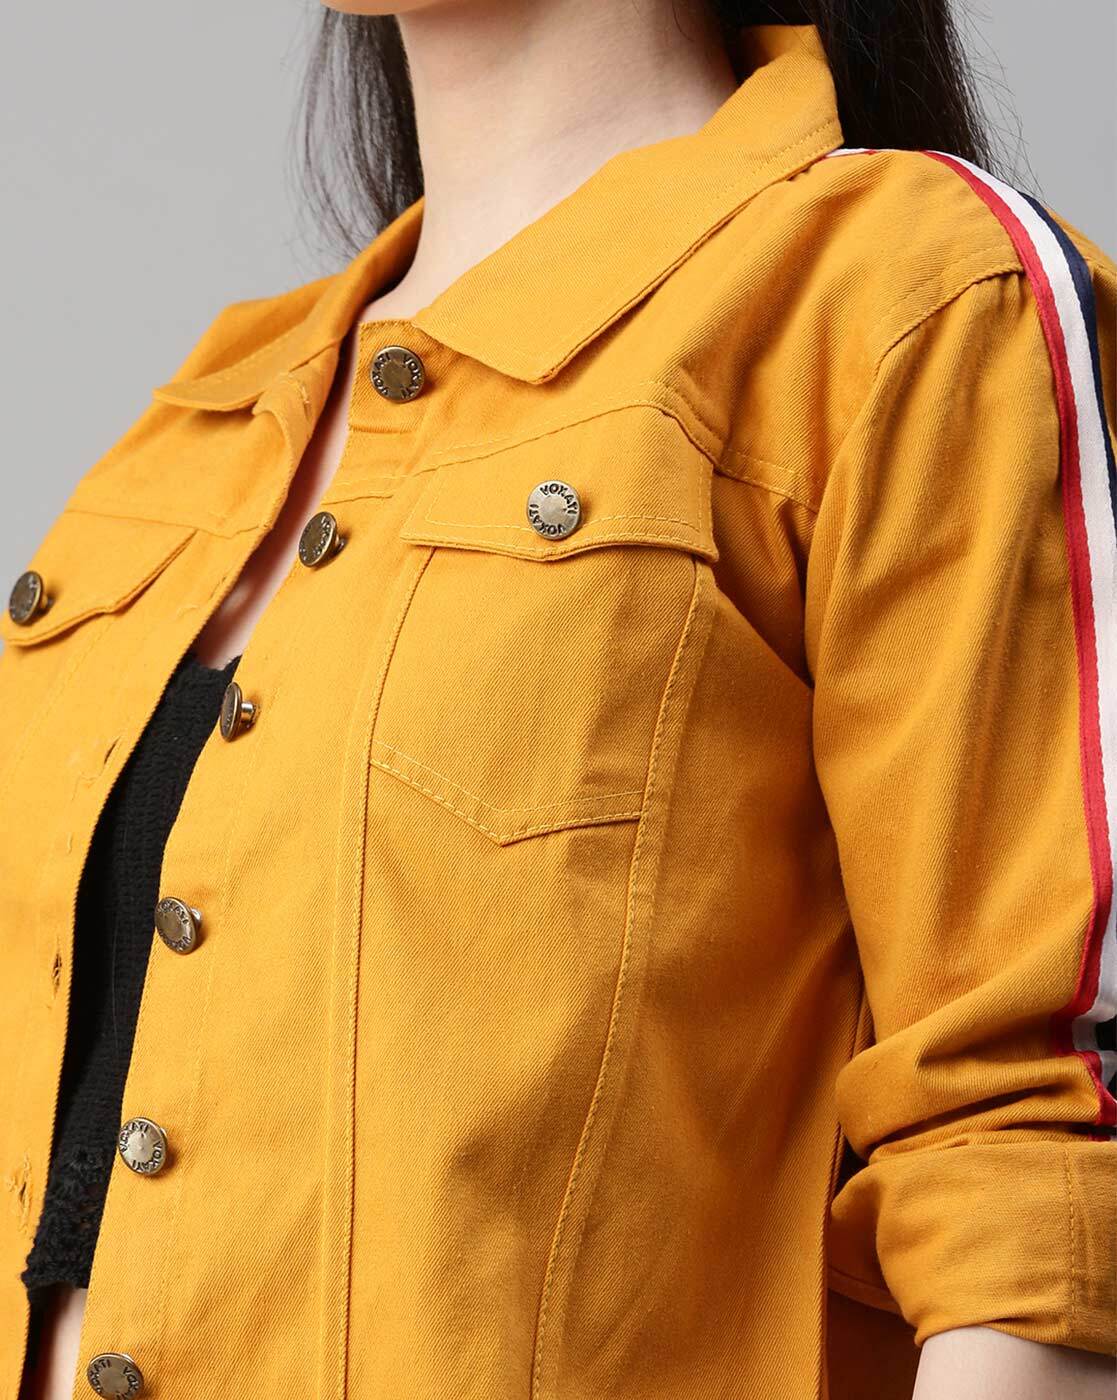 Buy Vintage Yellow Denim Jacket Online in India - Etsy